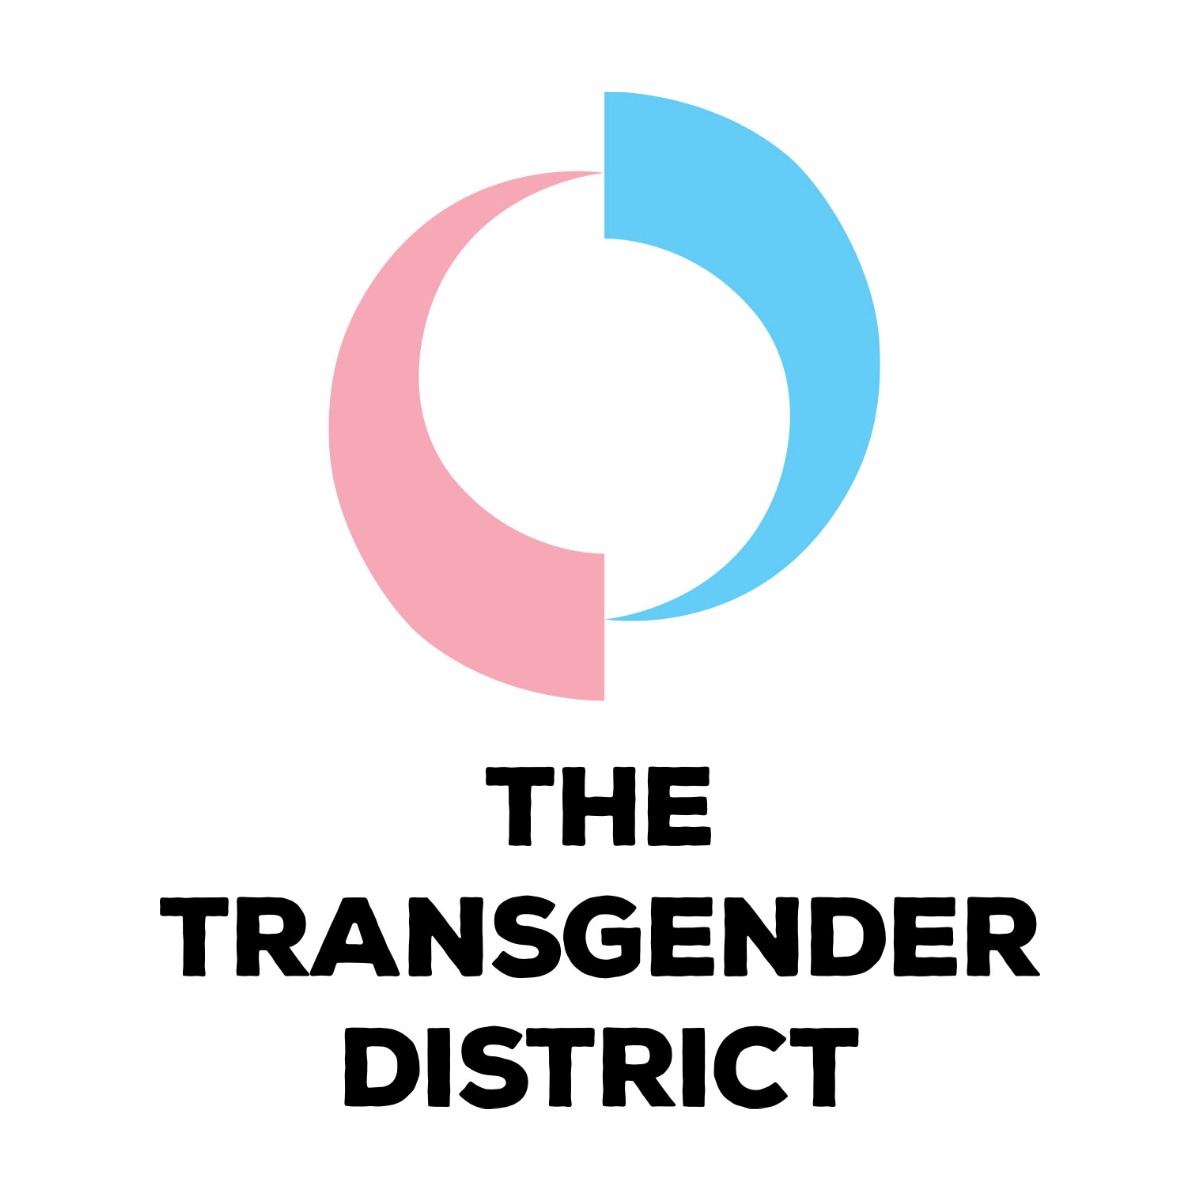 LGBTQ Organization in San Francisco California - Transgender District